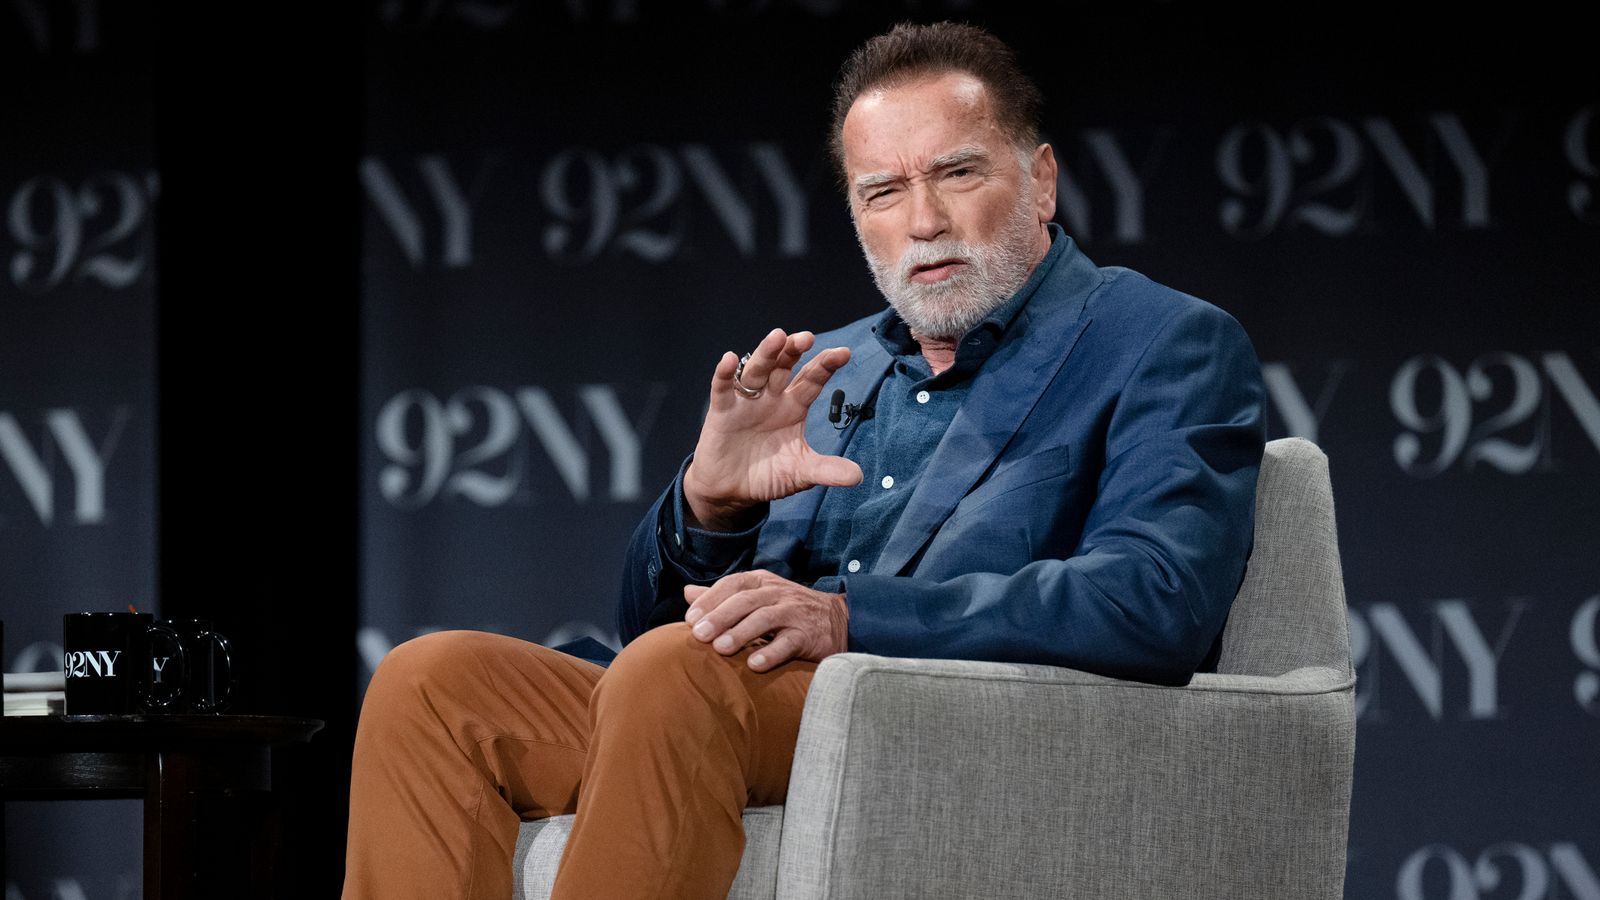 Arnold Schwarzenegger detained at Munich Airport over luxury watch